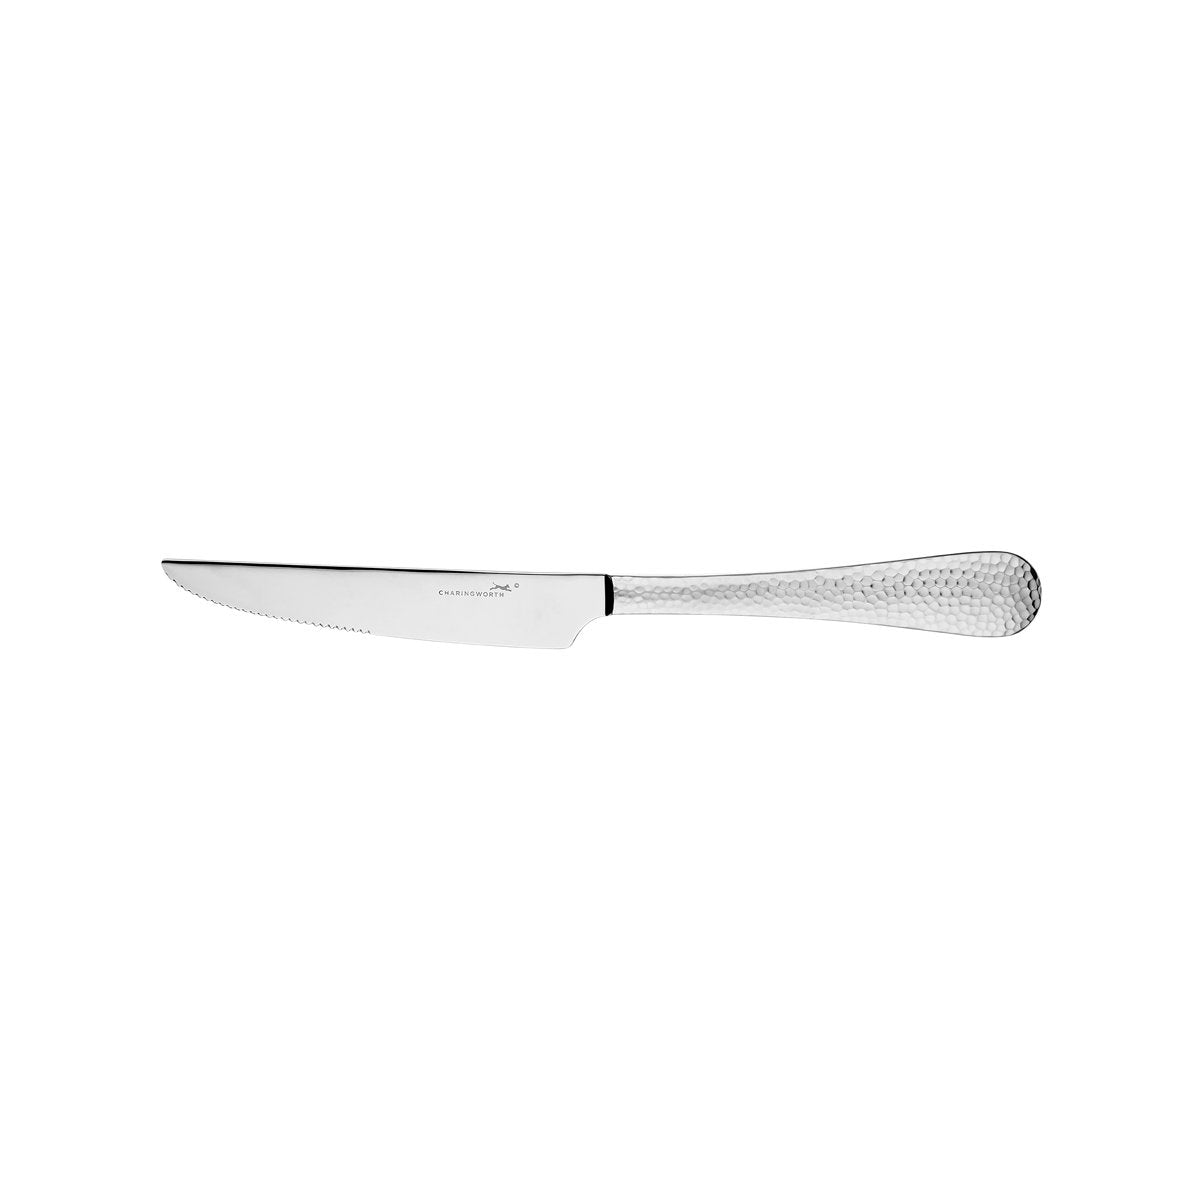 SWW-PLS15 Charingworth Planish Steak Knife Tomkin Australia Hospitality Supplies